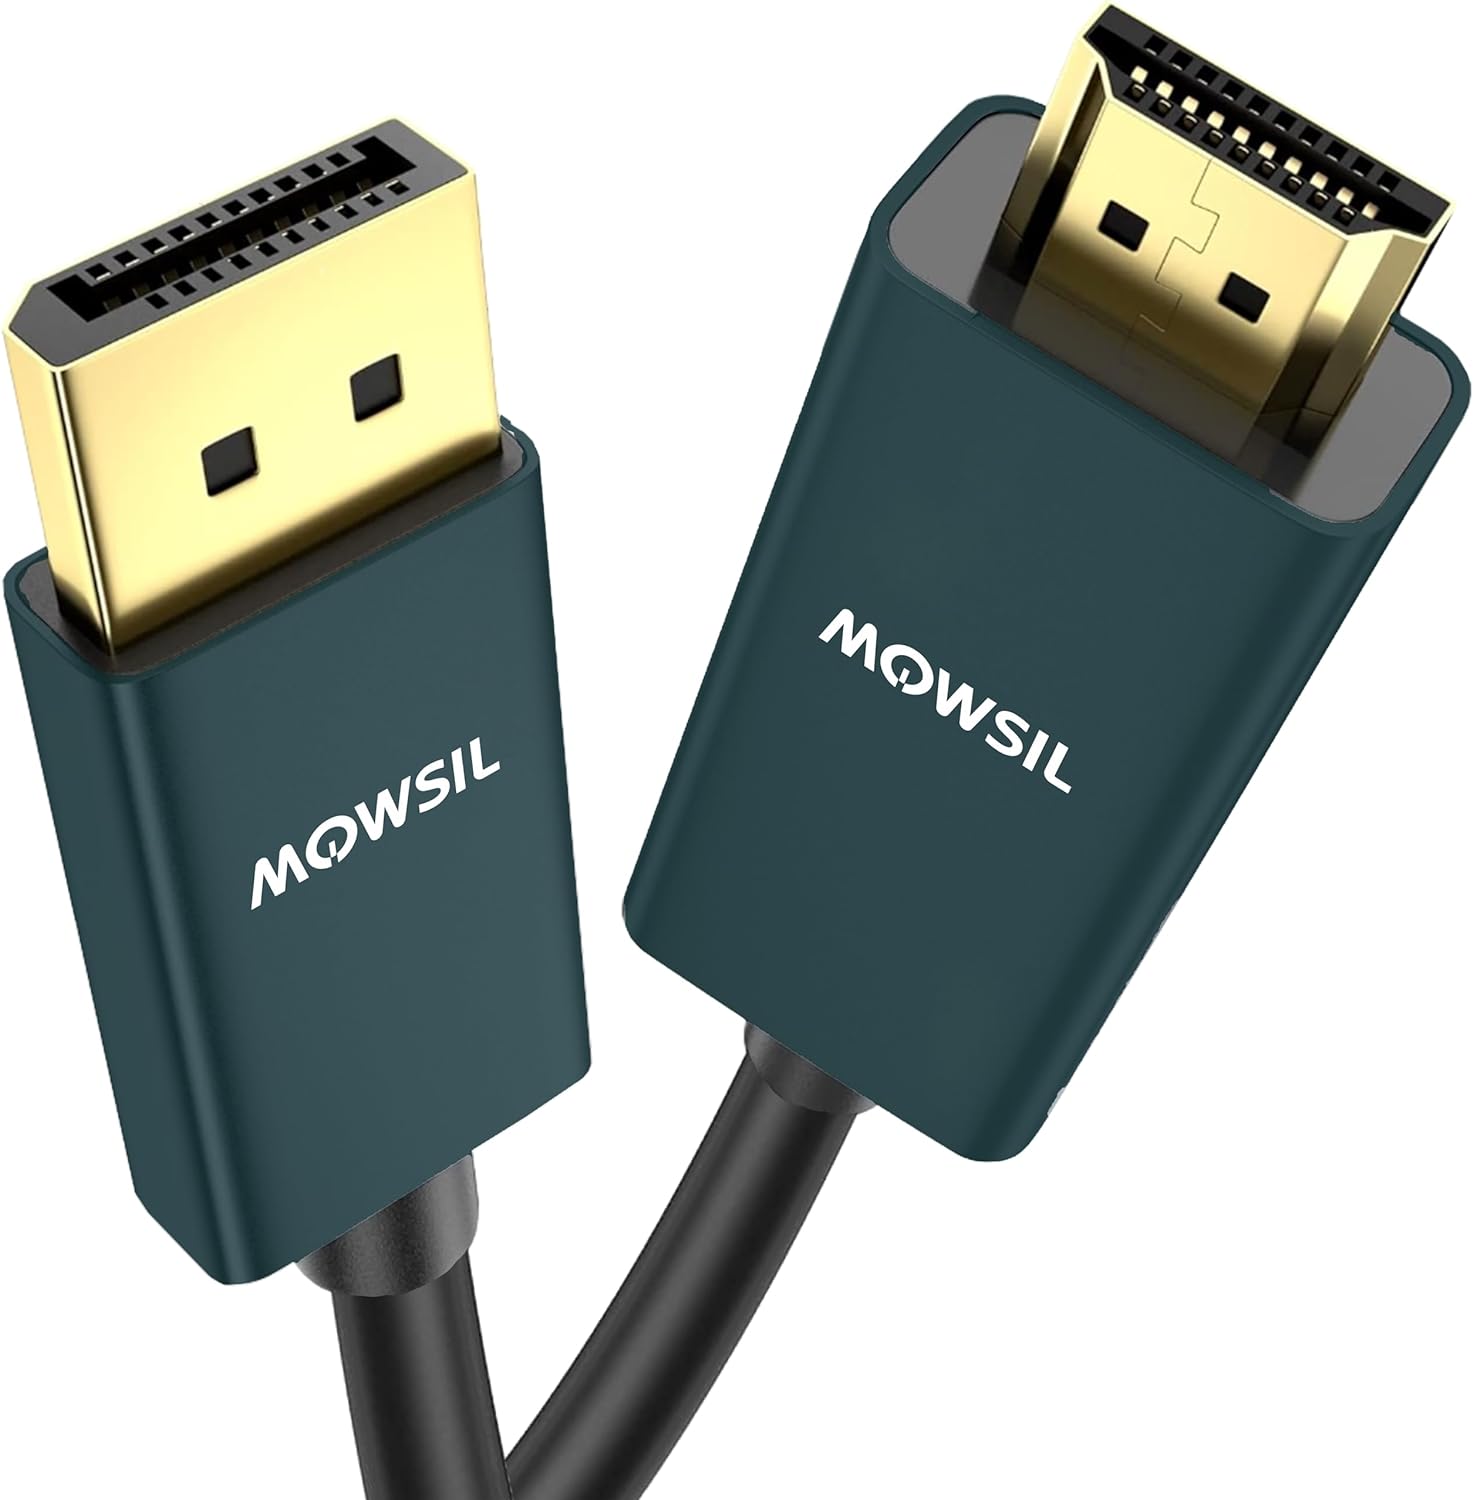 Mowsil_4K@60Hz_DisplayPort_1.2_to_HDMI_2.0_Cable_2Mtr-1.jpg